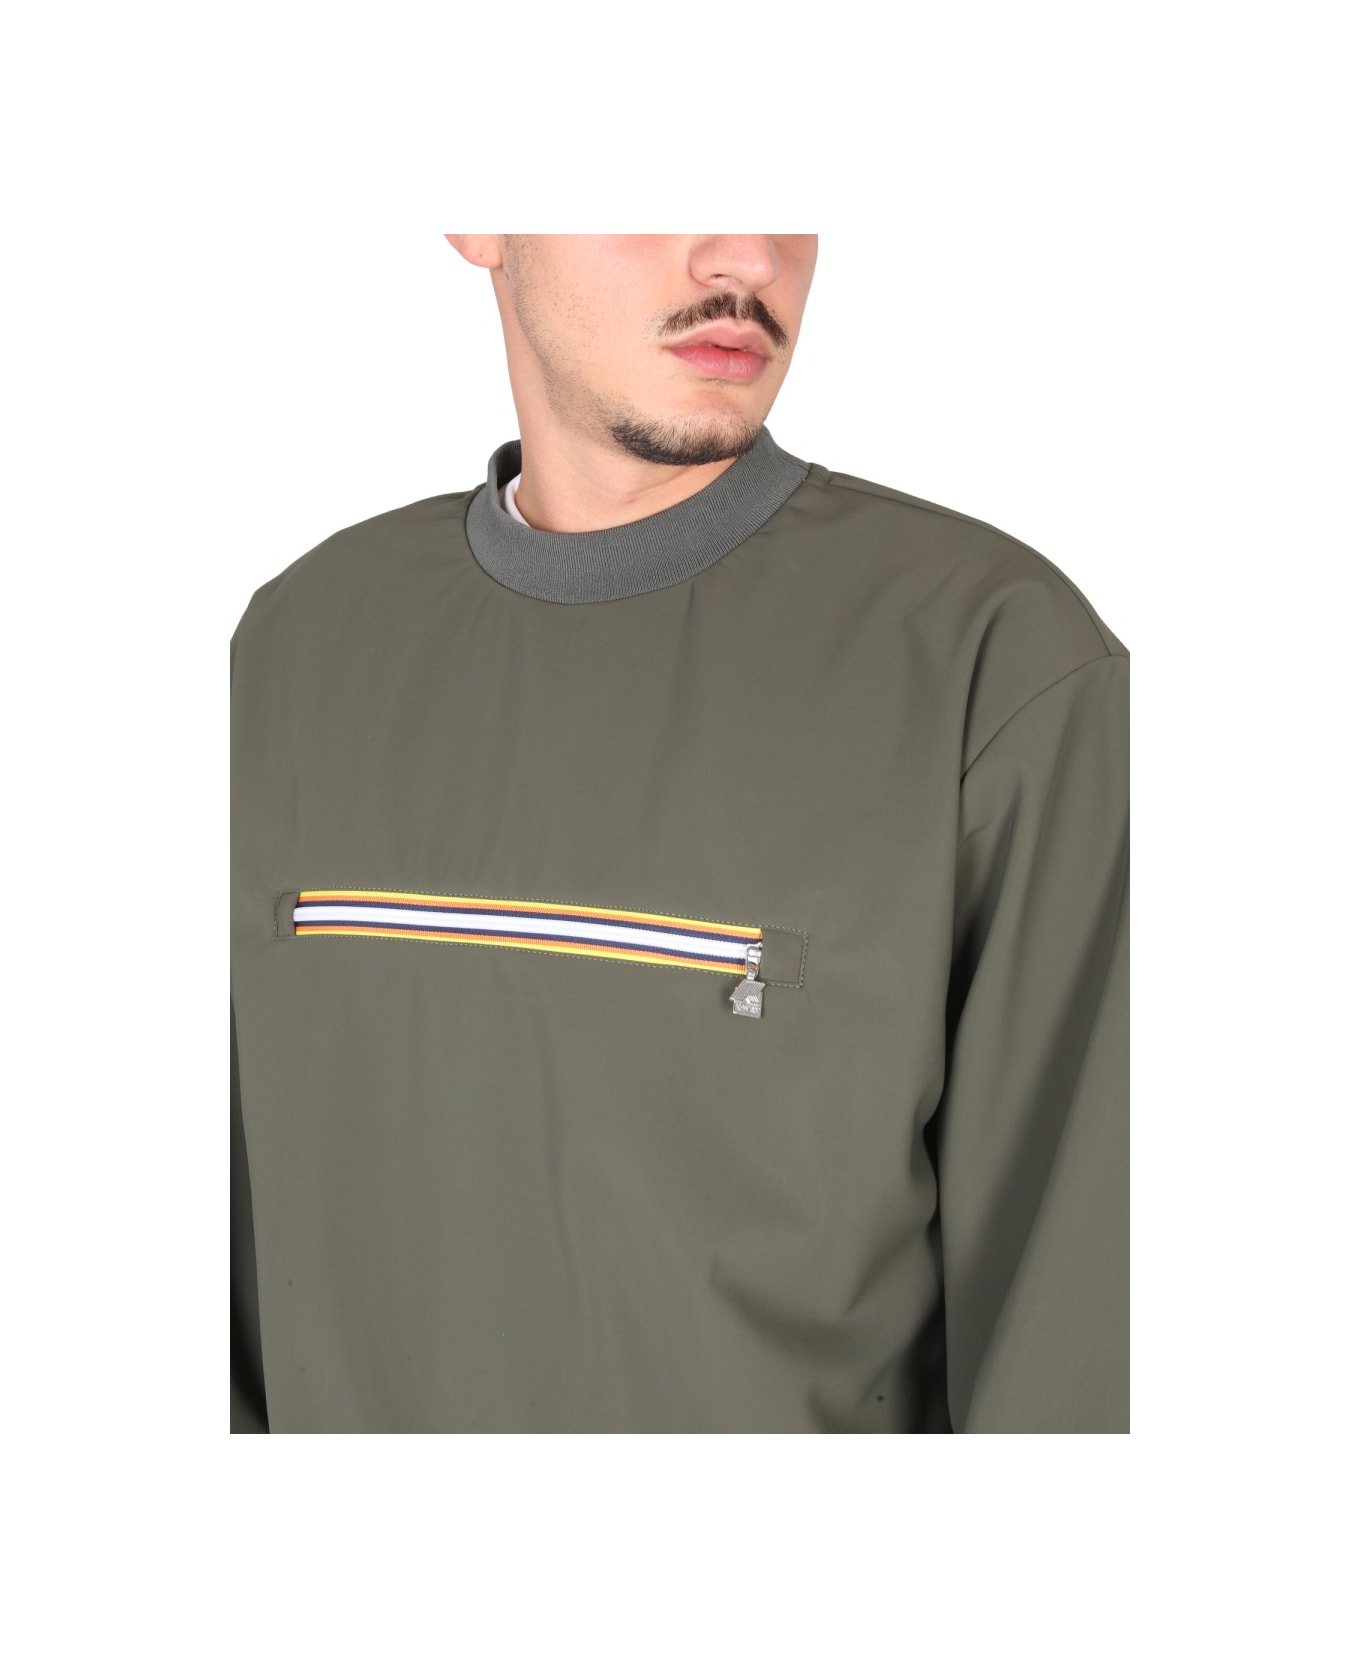 K-Way Sweatshirt With Front Pocket - GREEN